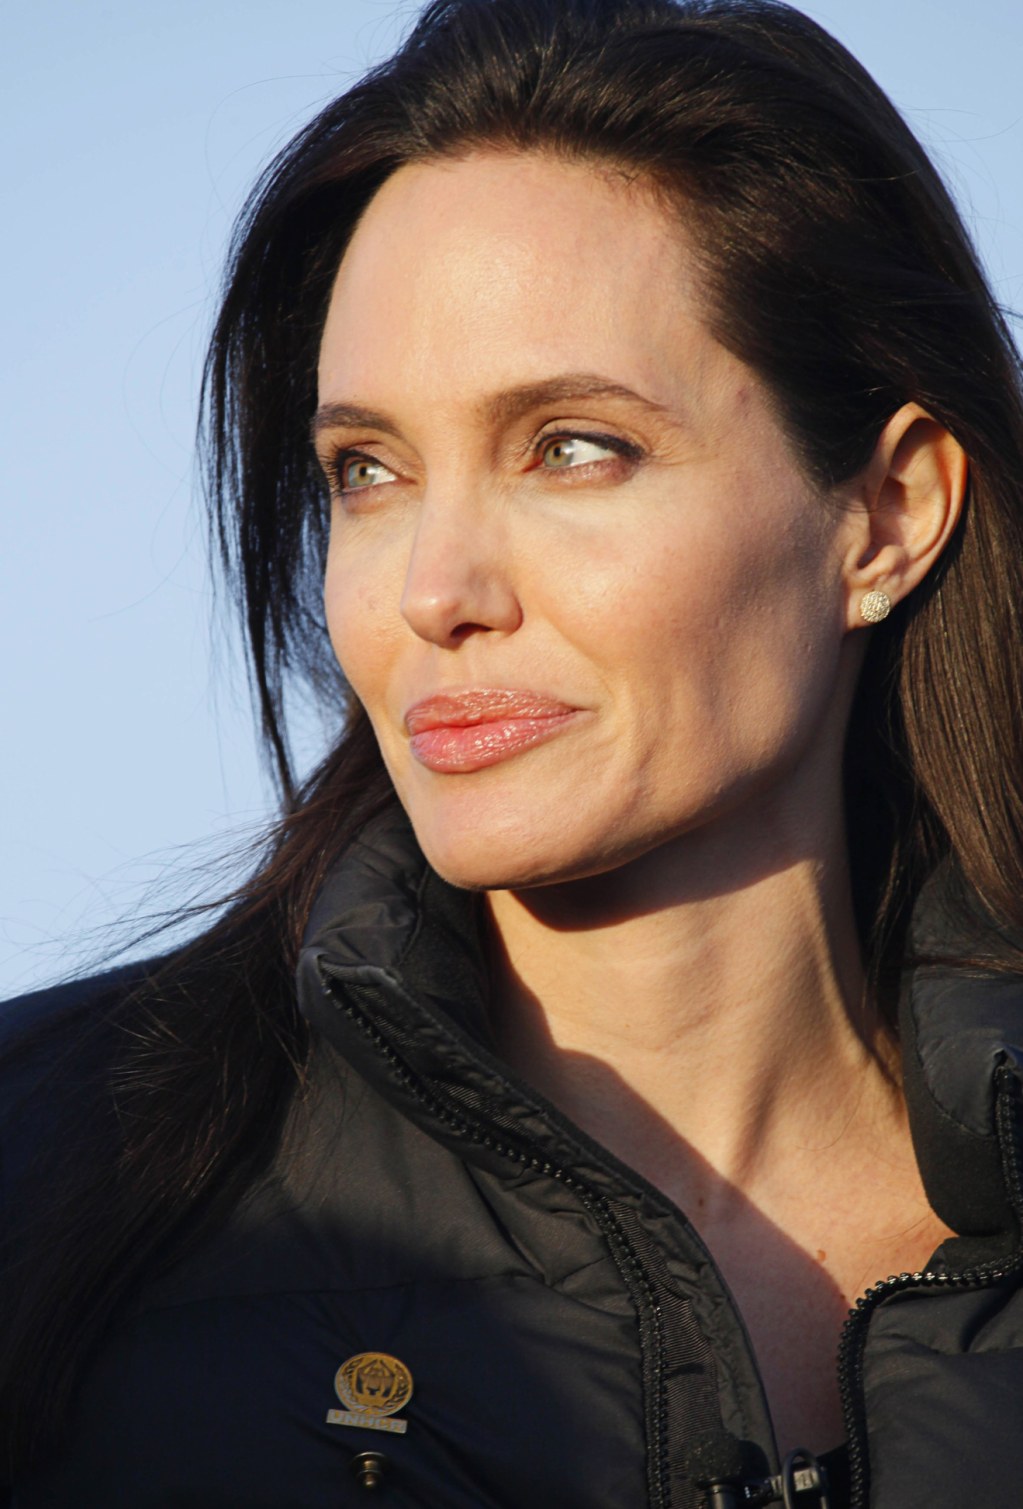 Angelina Jolie Photo 3173 Of 4203 Pics Wallpaper Photo 757766 Theplace2